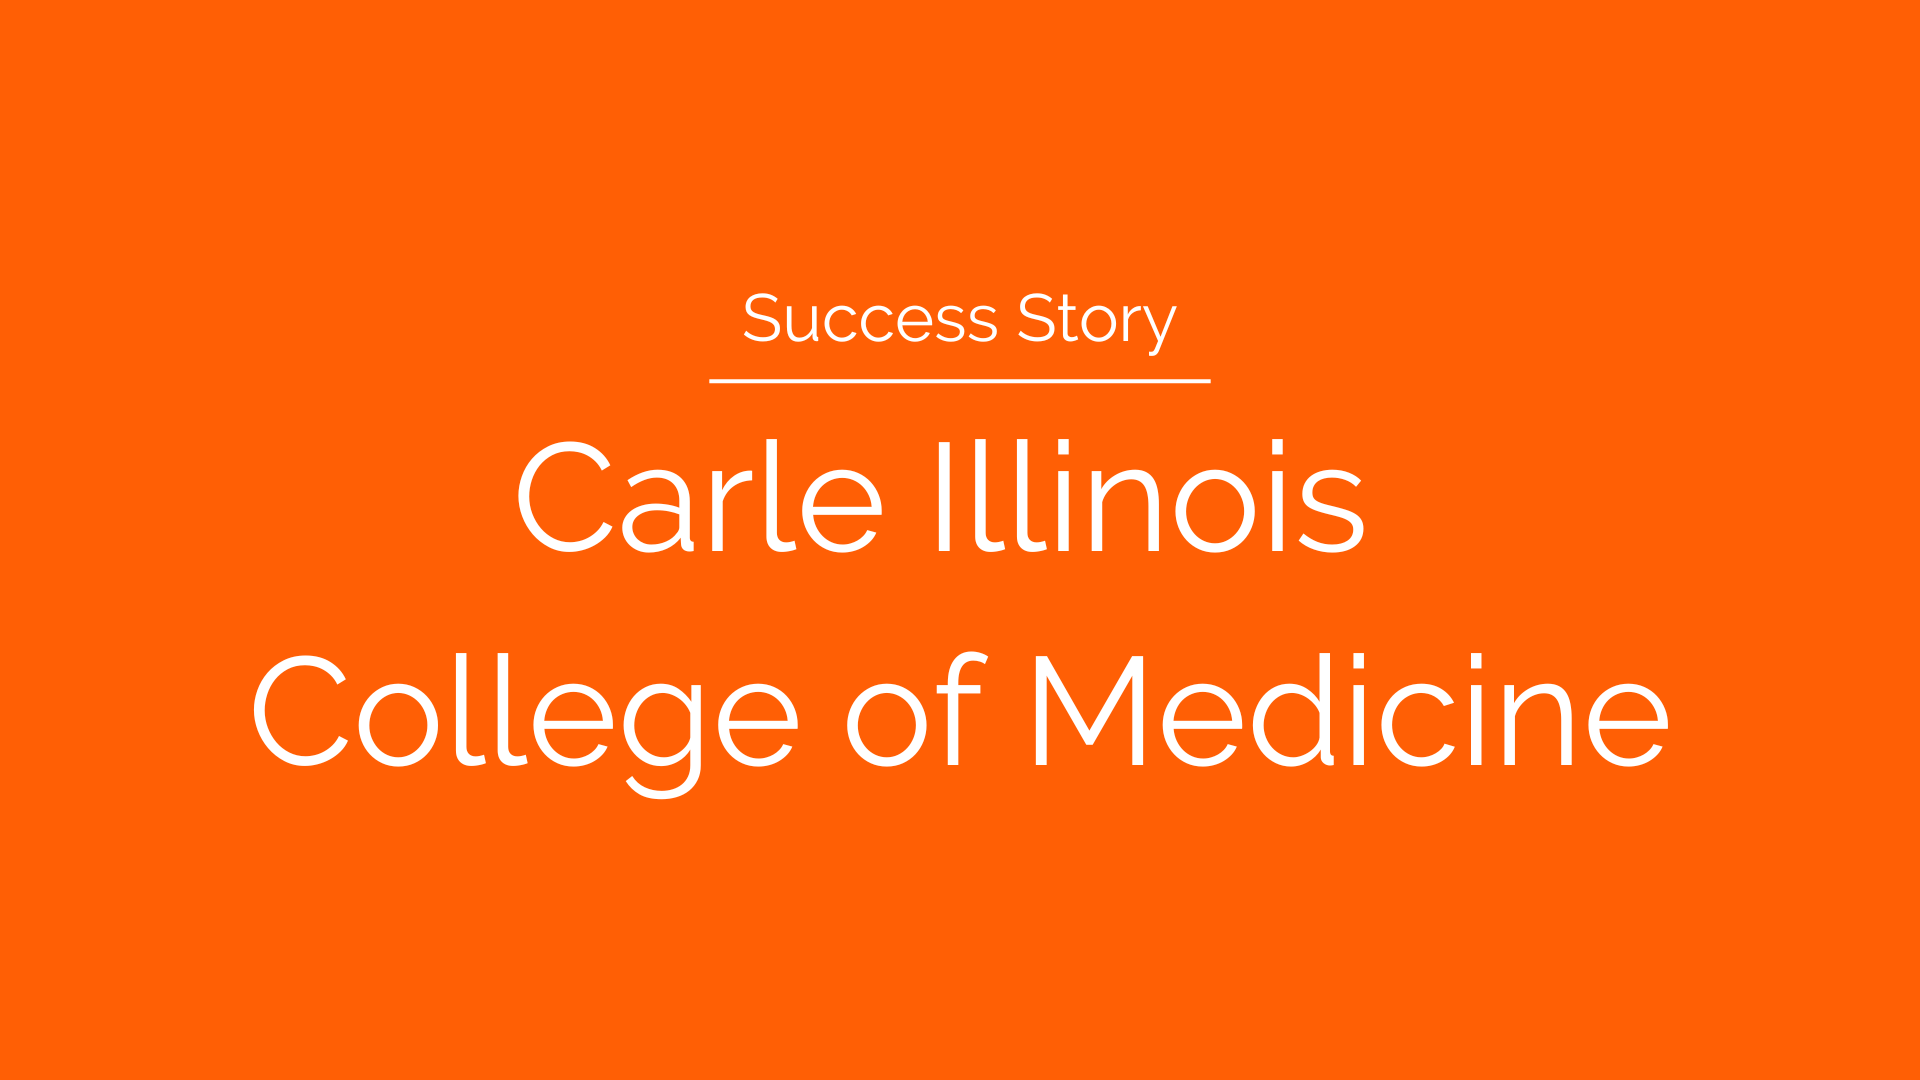 Success Story: Carle Illinois College of Medicine